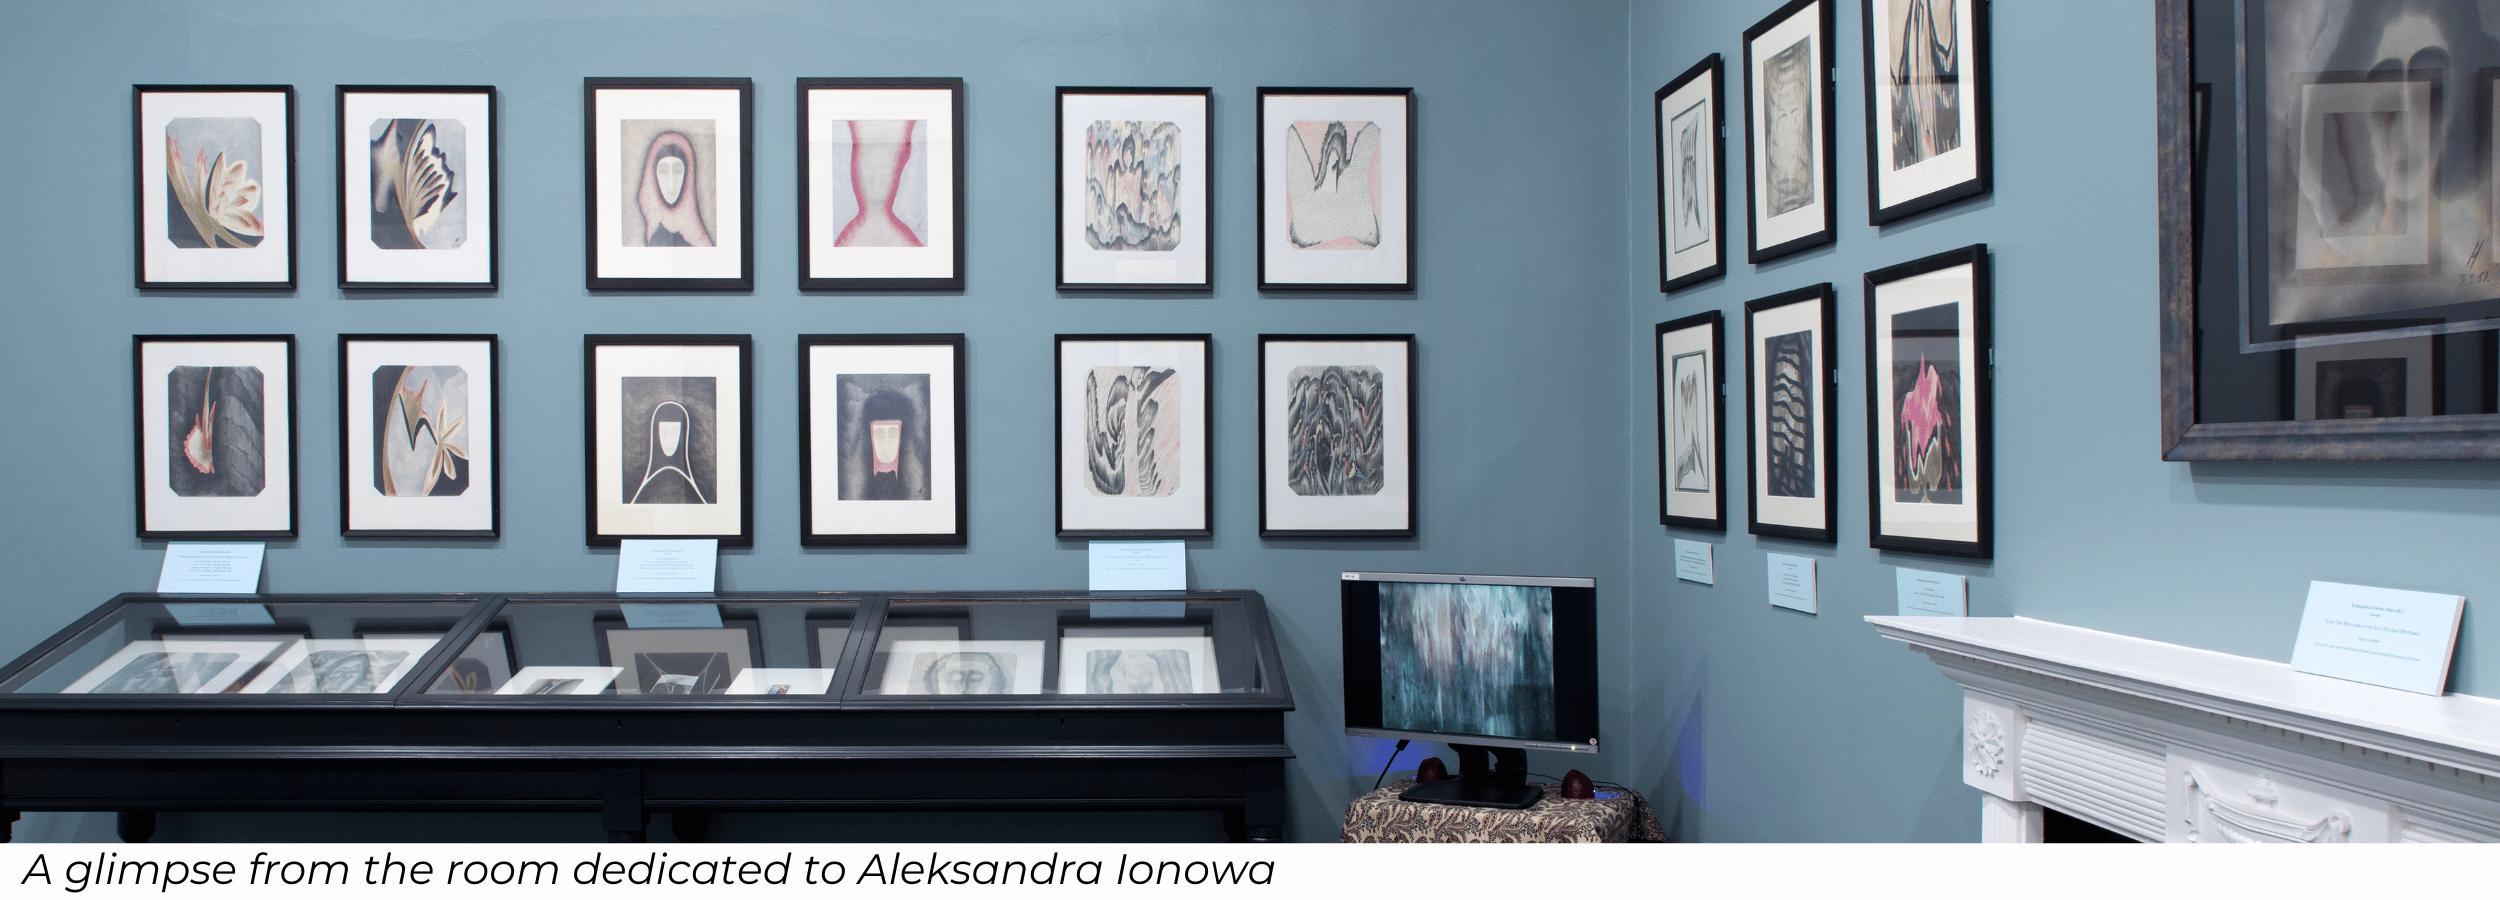 The Aleksandra Ionowa room